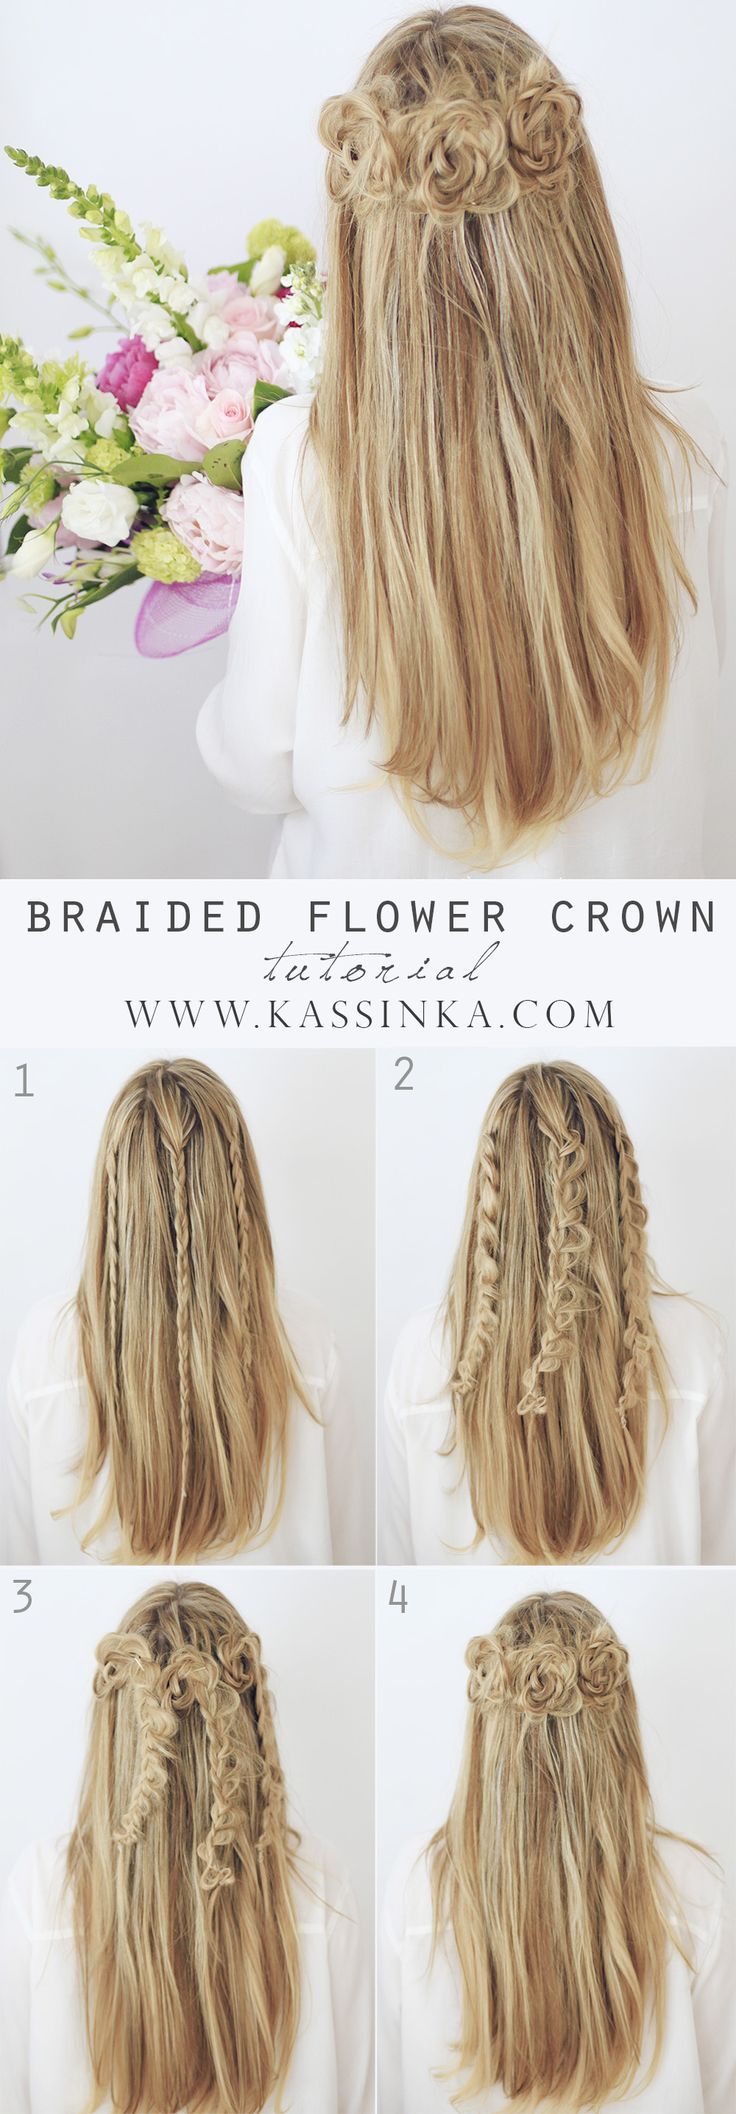 Braided Flower Crown (Kassinka)